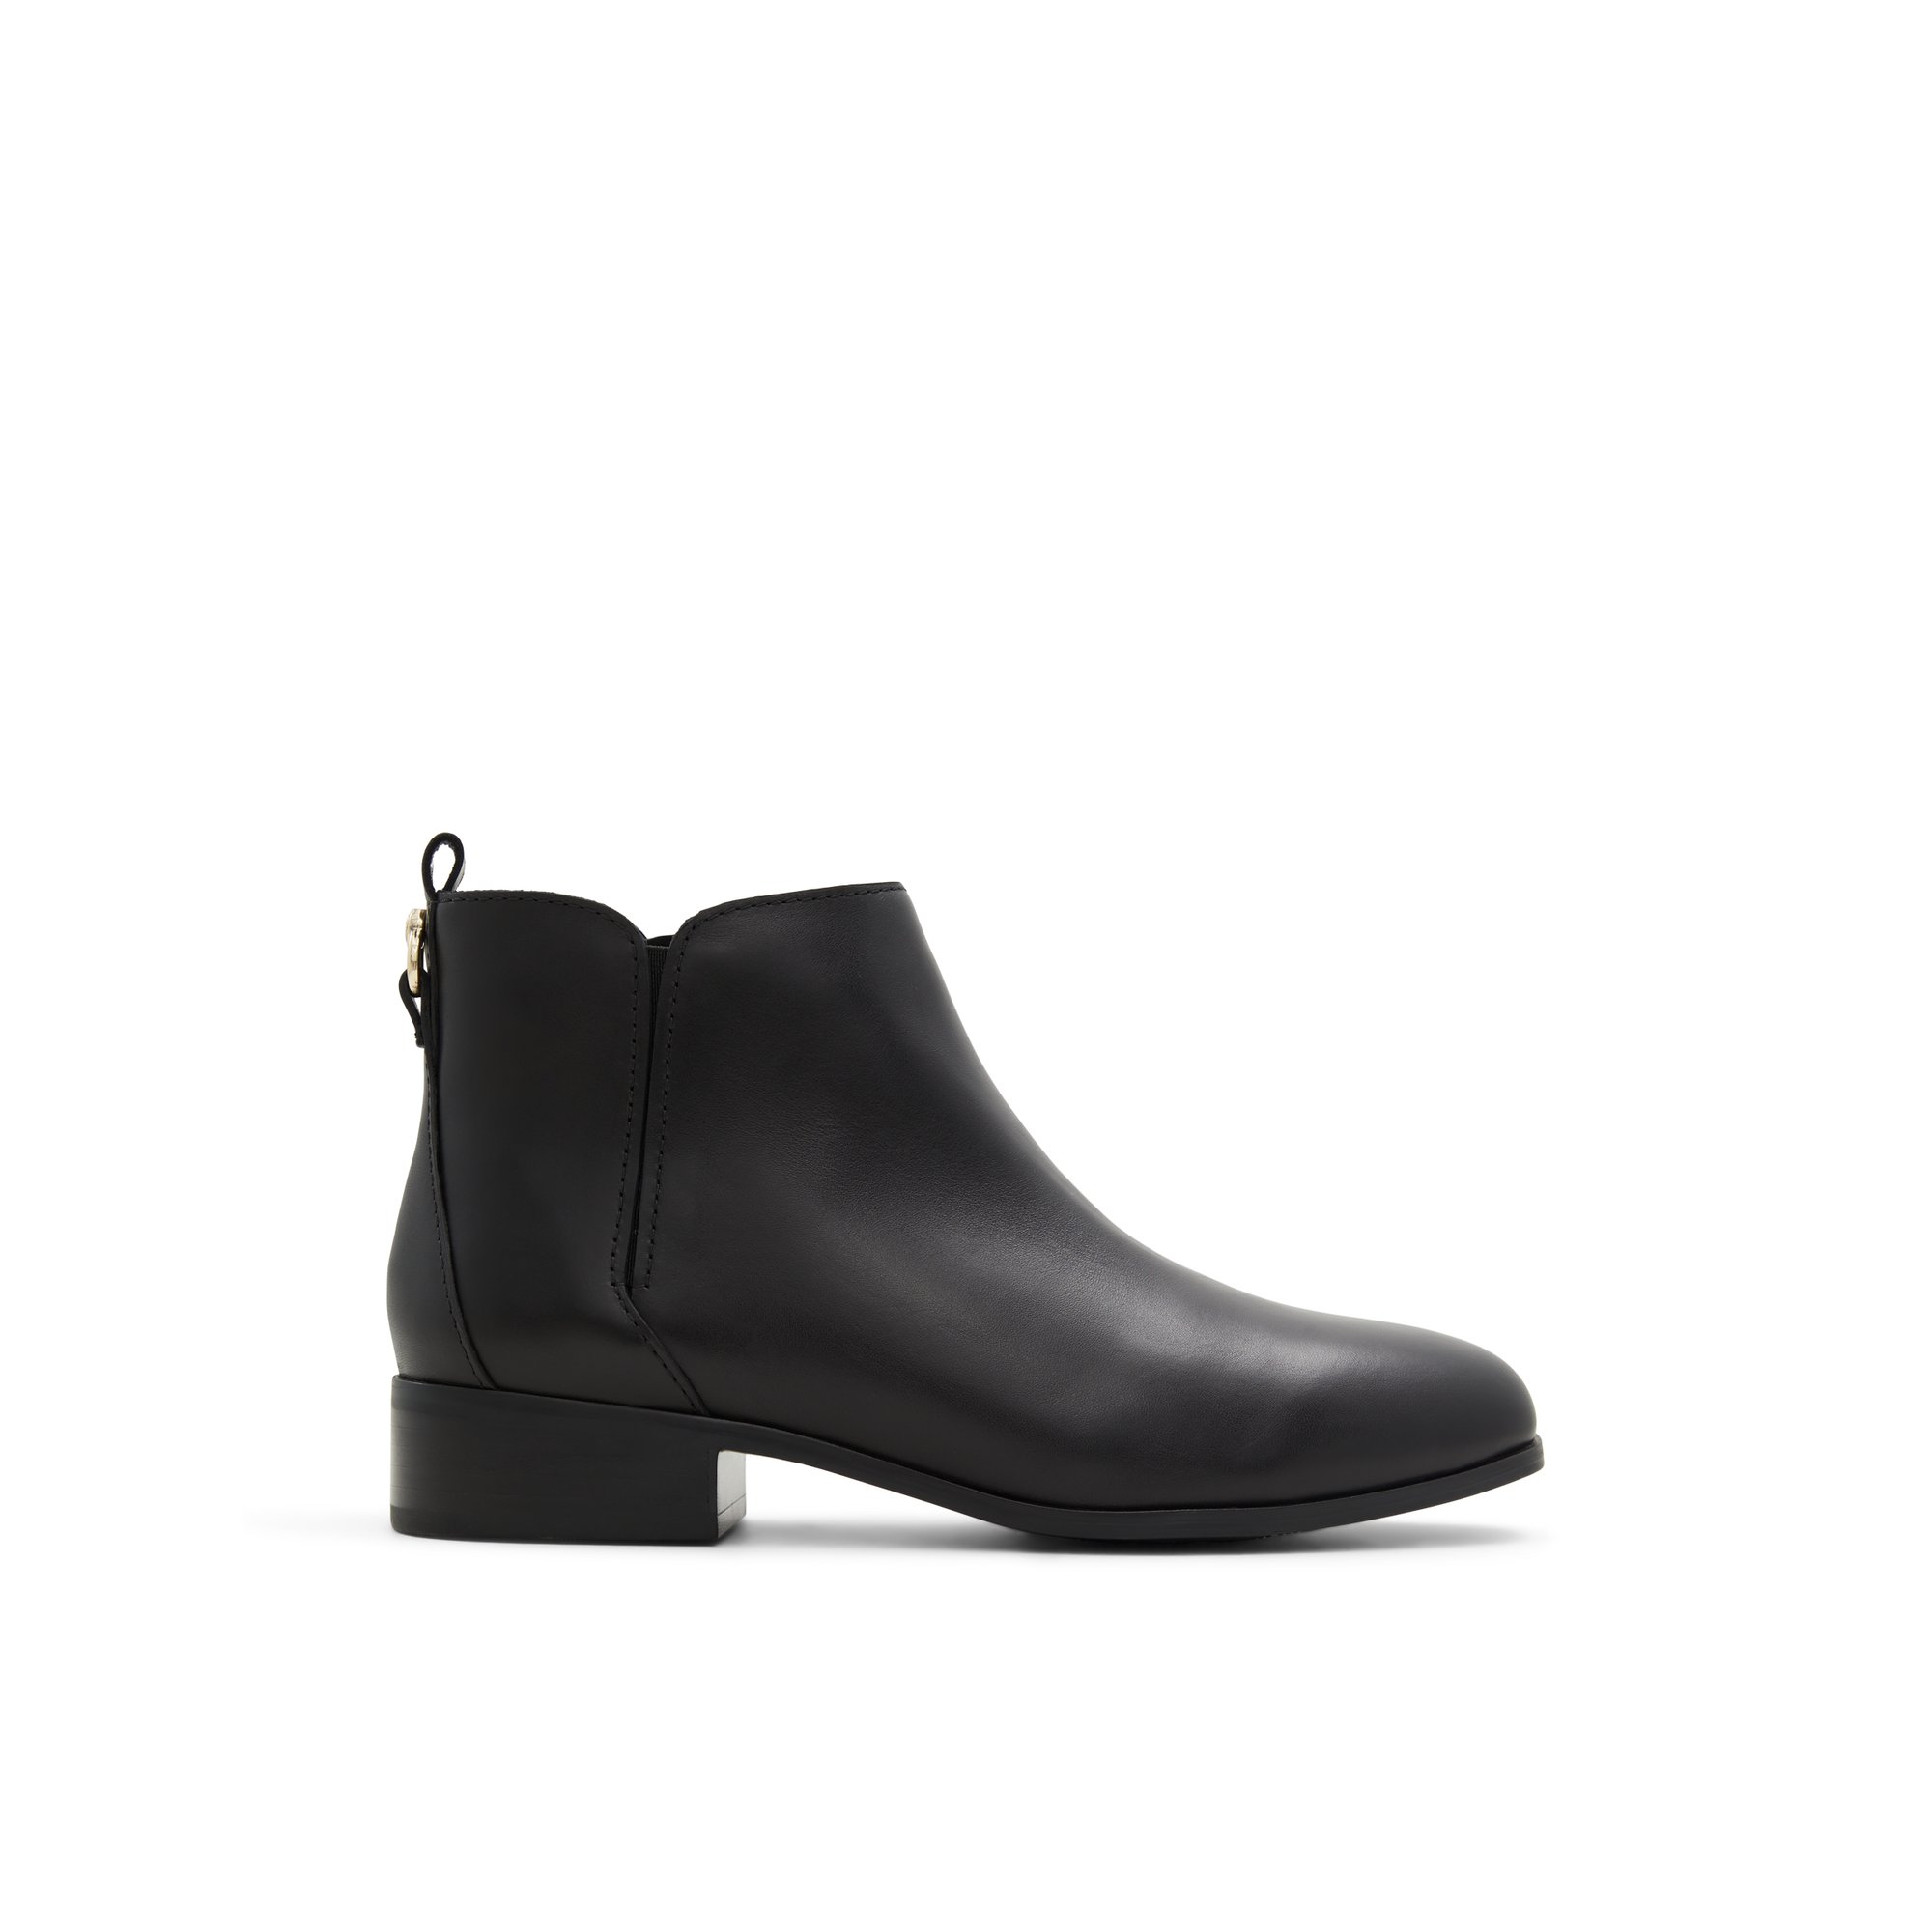 ALDO Verity - Women's Casual Boot - Black